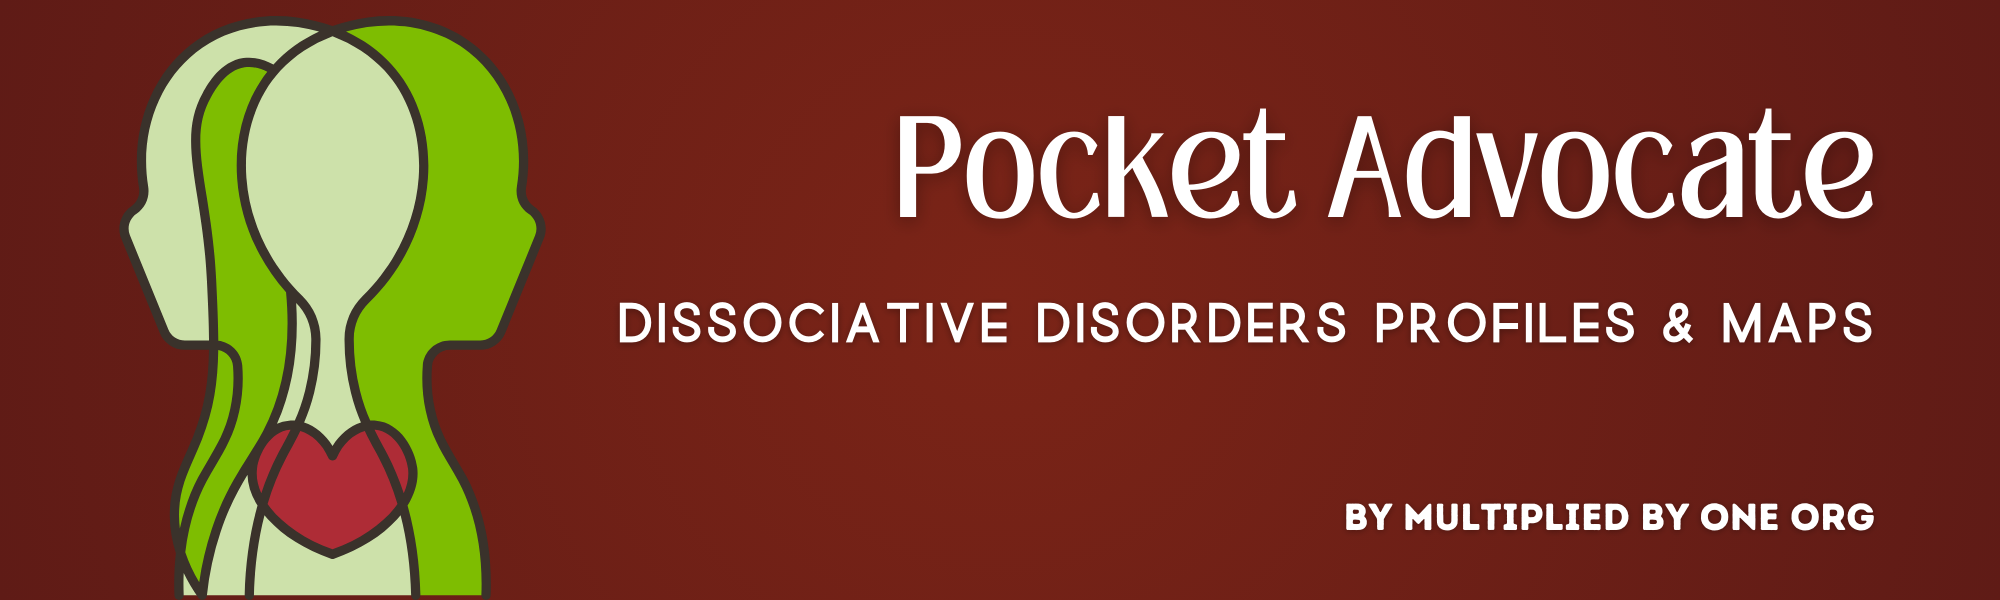 Pocket Advocate App